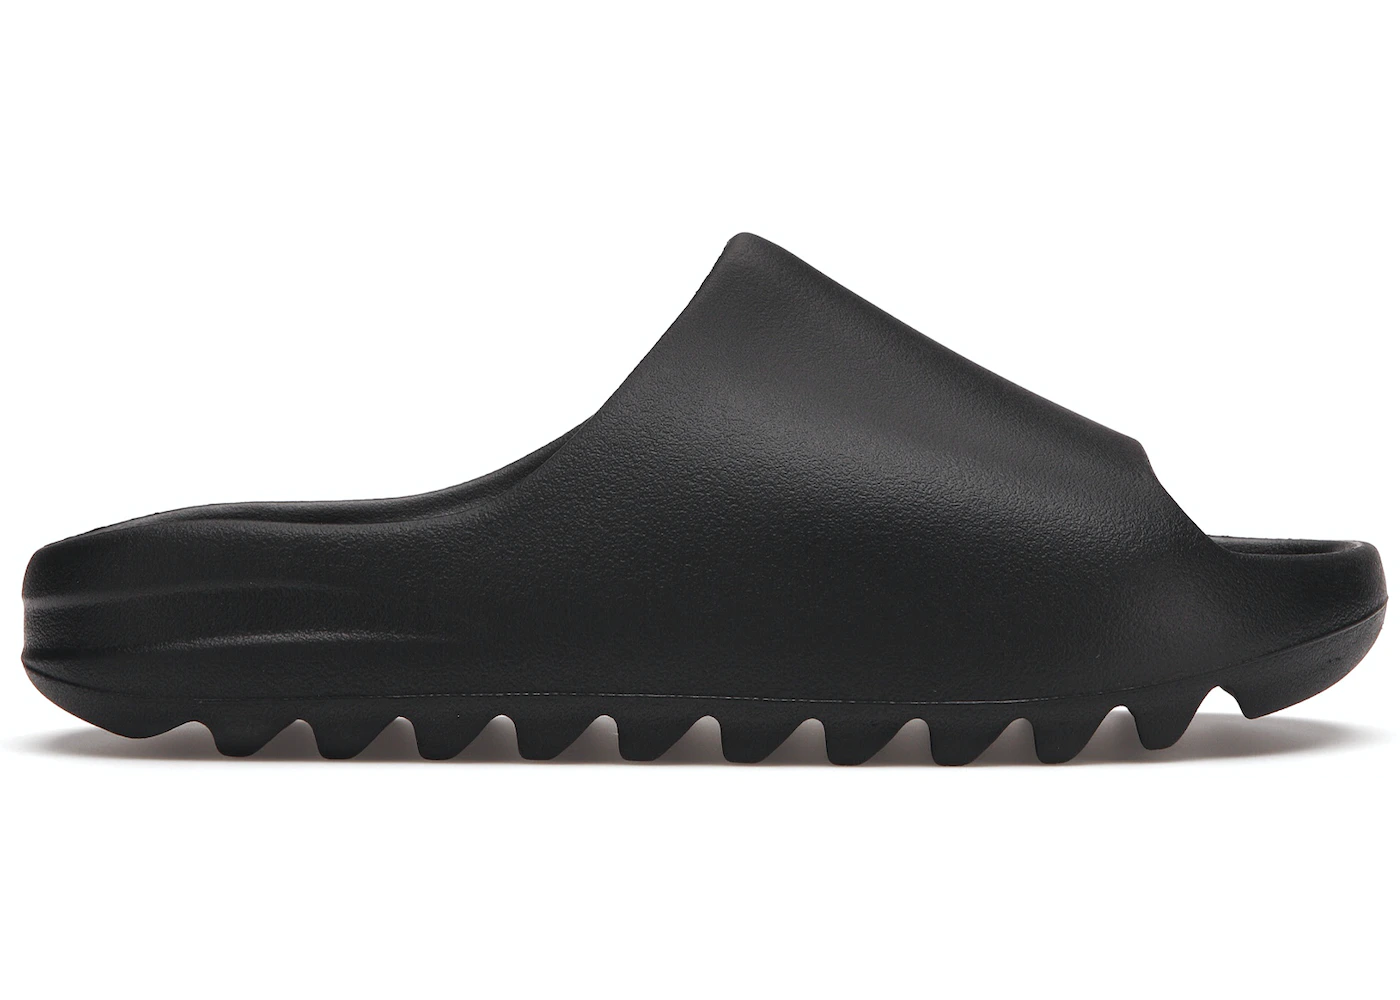 adidas-Yeezy-Slide-Black-Product